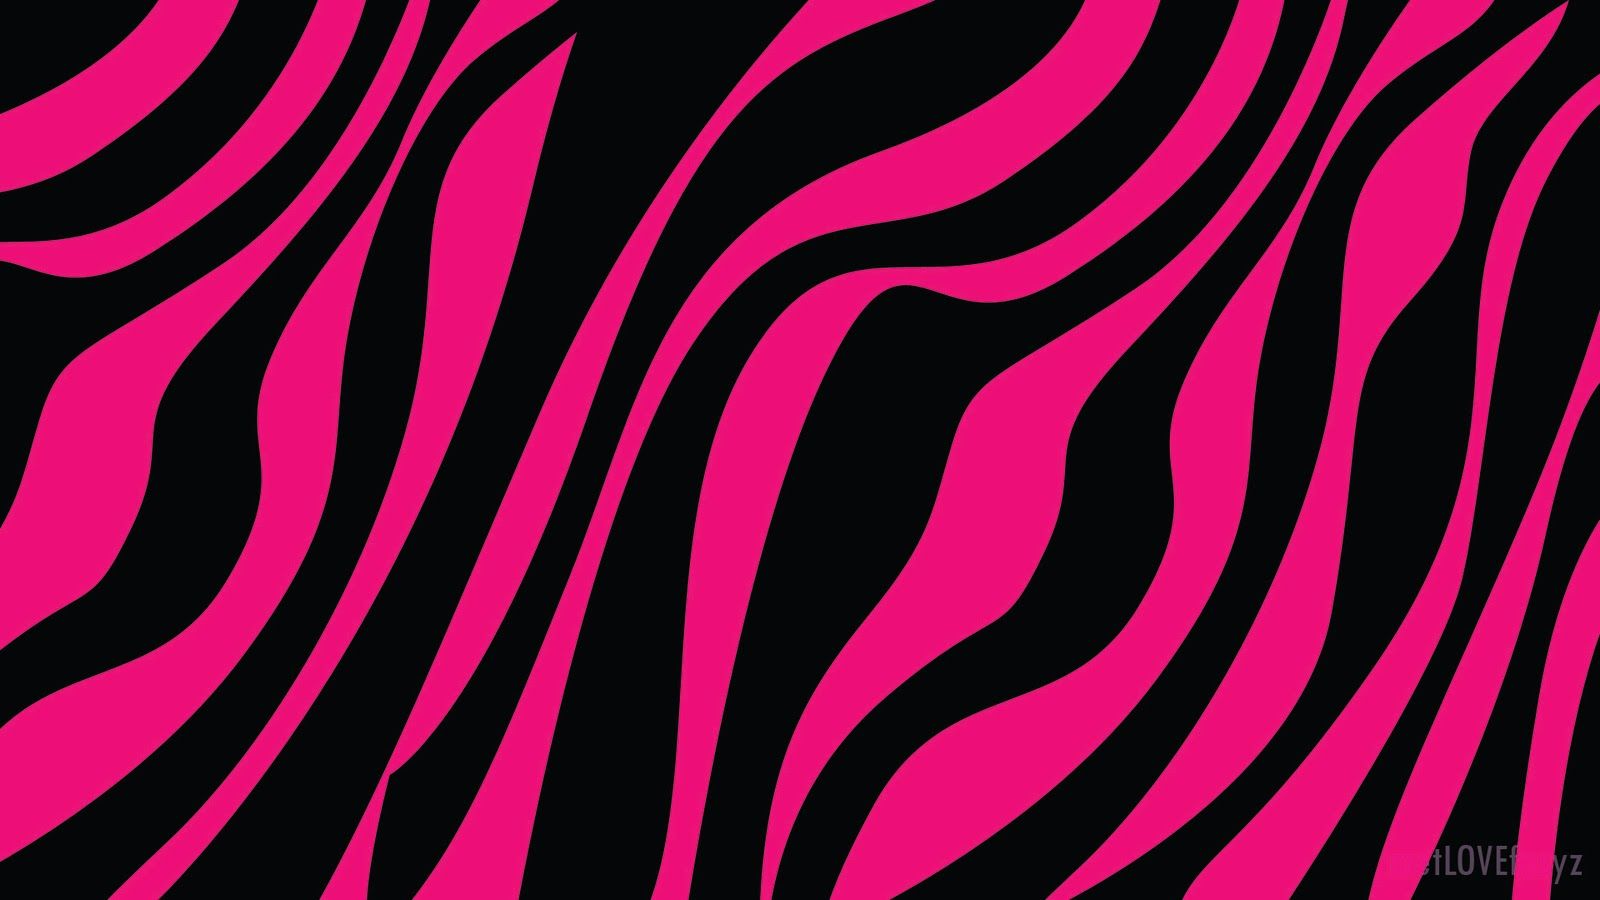 Pink and Black Zebra Wallpaper Free Pink and Black Zebra Background